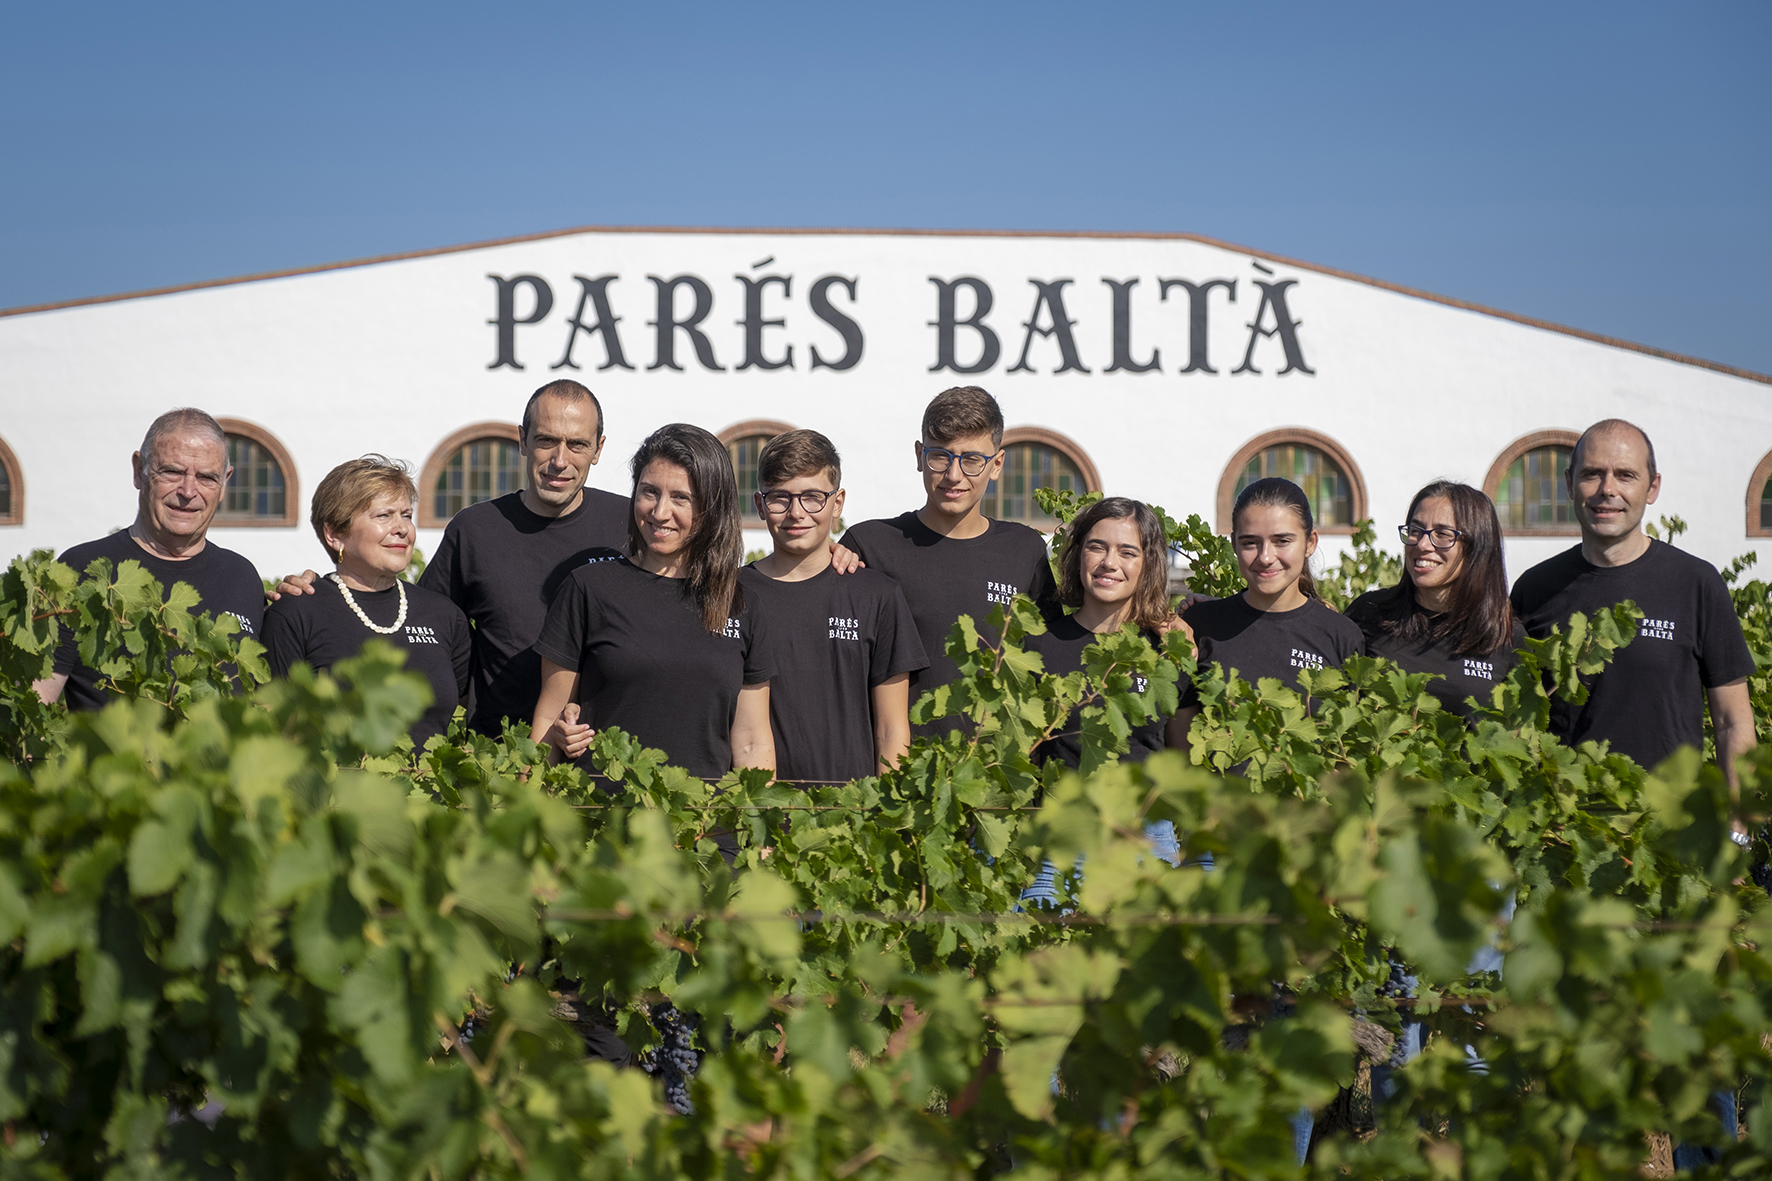 Parés baltà organic and biodynamic wines and cavas